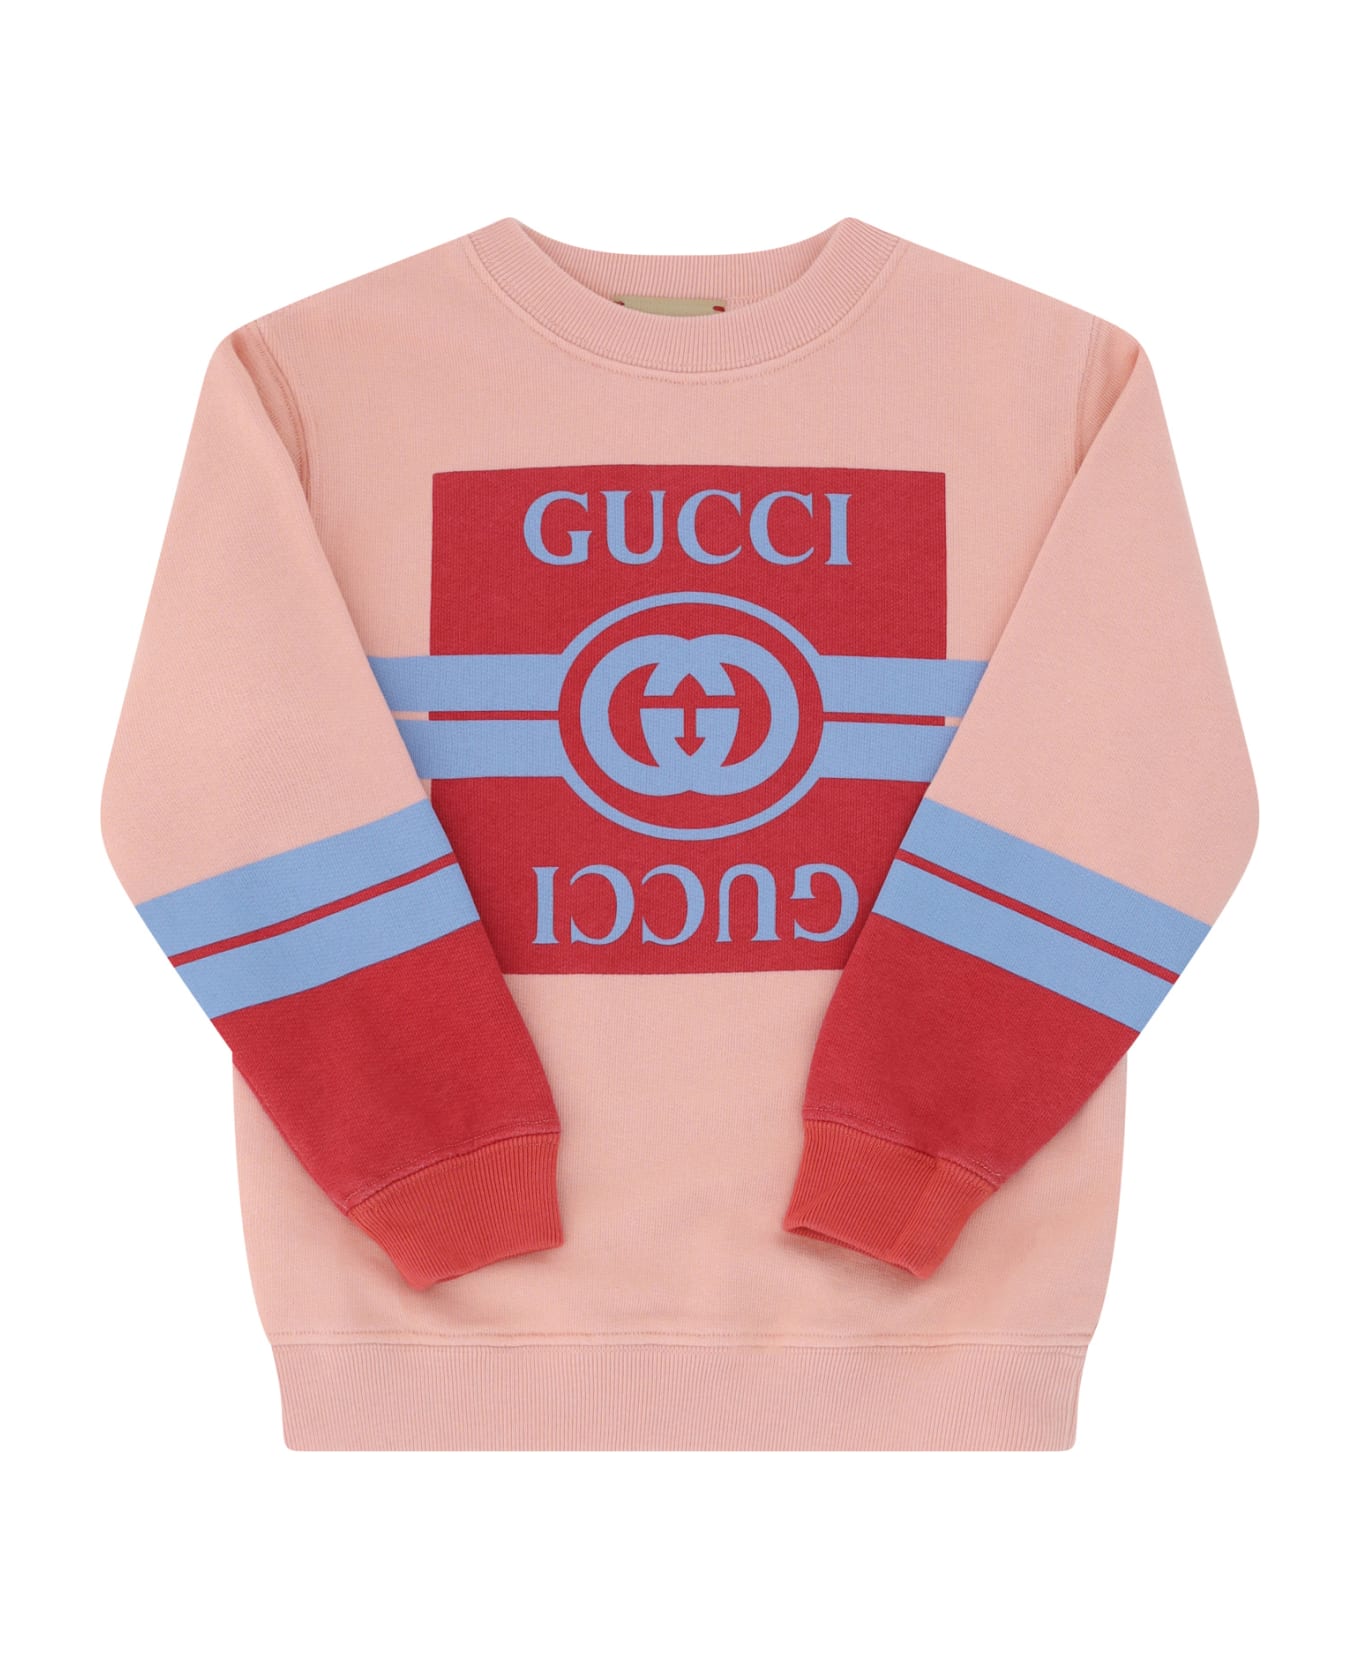 Gucci Sweatshirt For Girl - Pink/sky/tulips